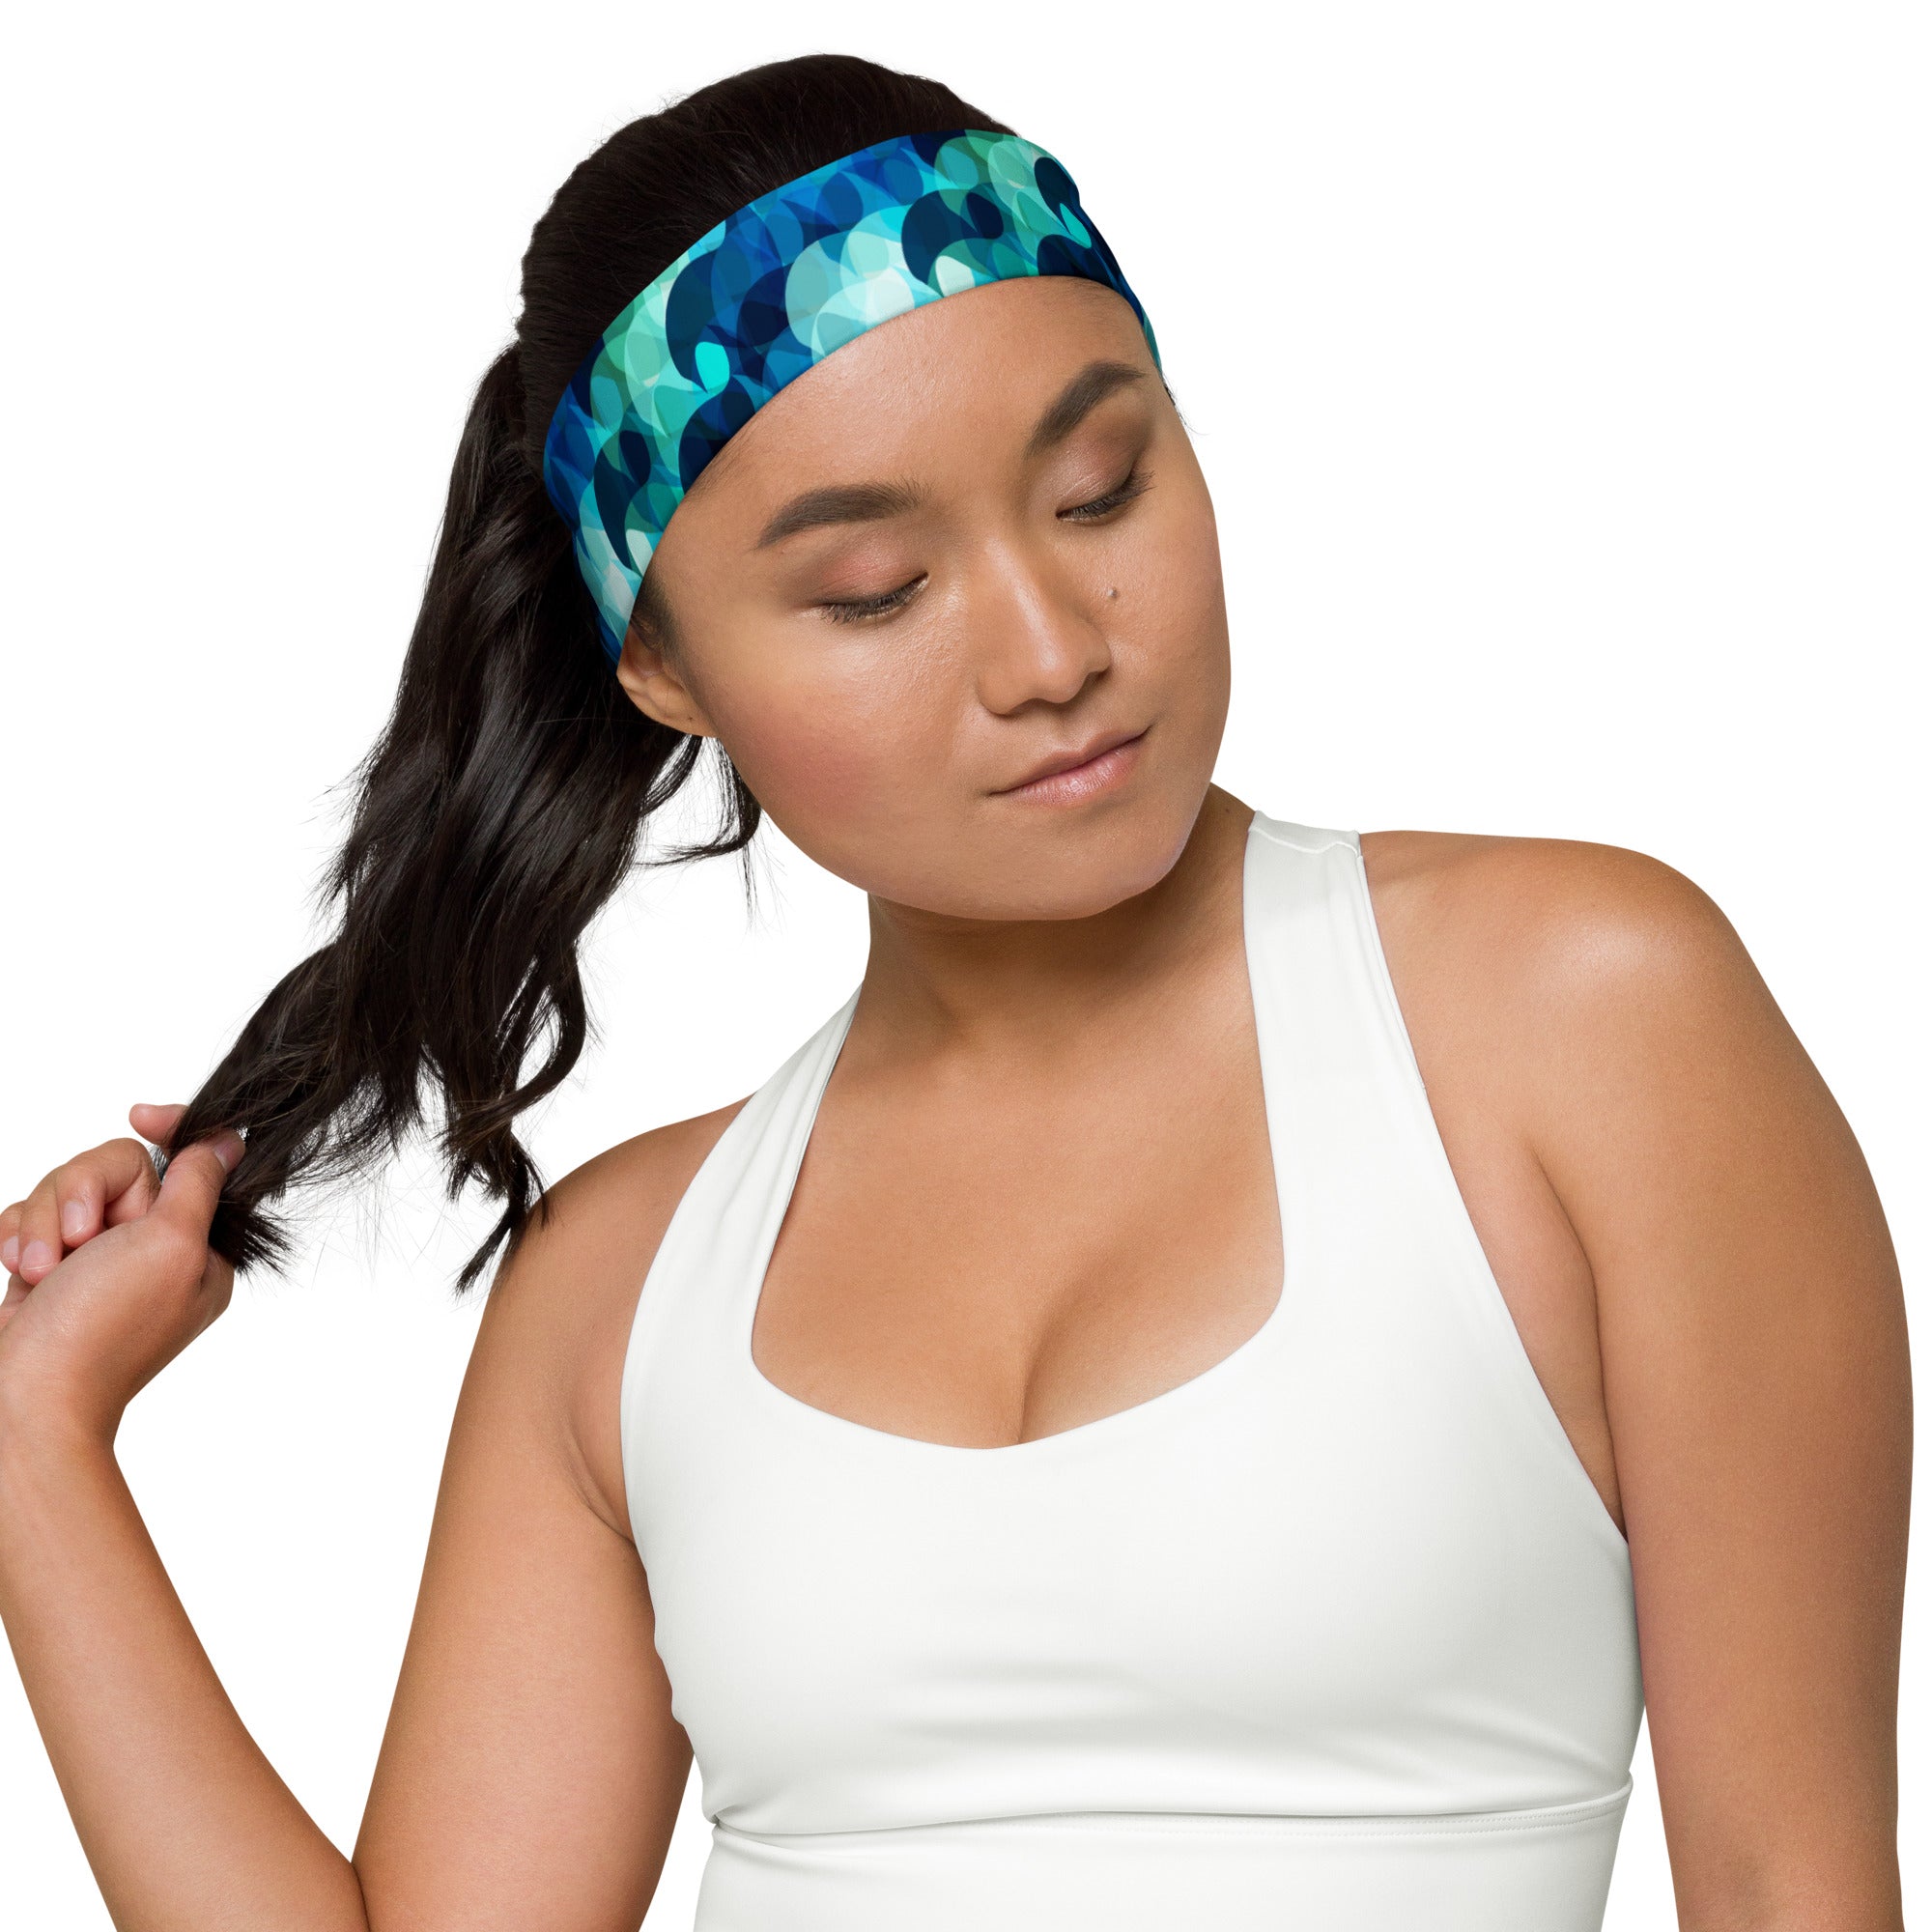 Women's Printed Headband - Mermaid Scales